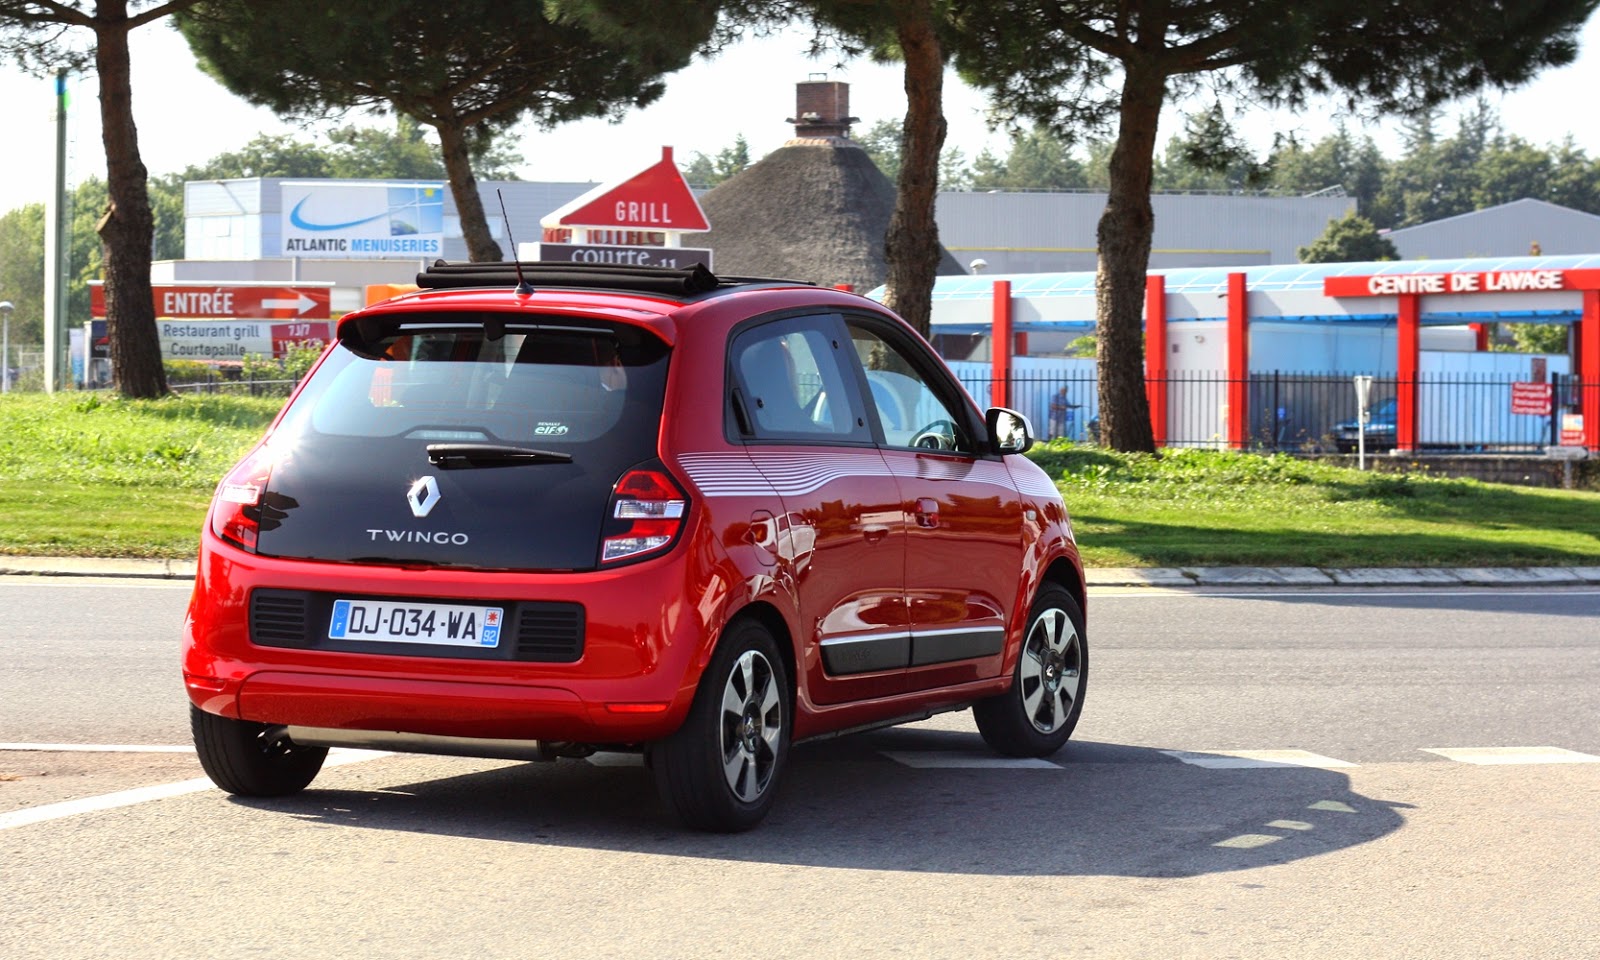 2014 Renault Twingo in Nantes, France | Photo © Raphael Gürth/autofilou.at